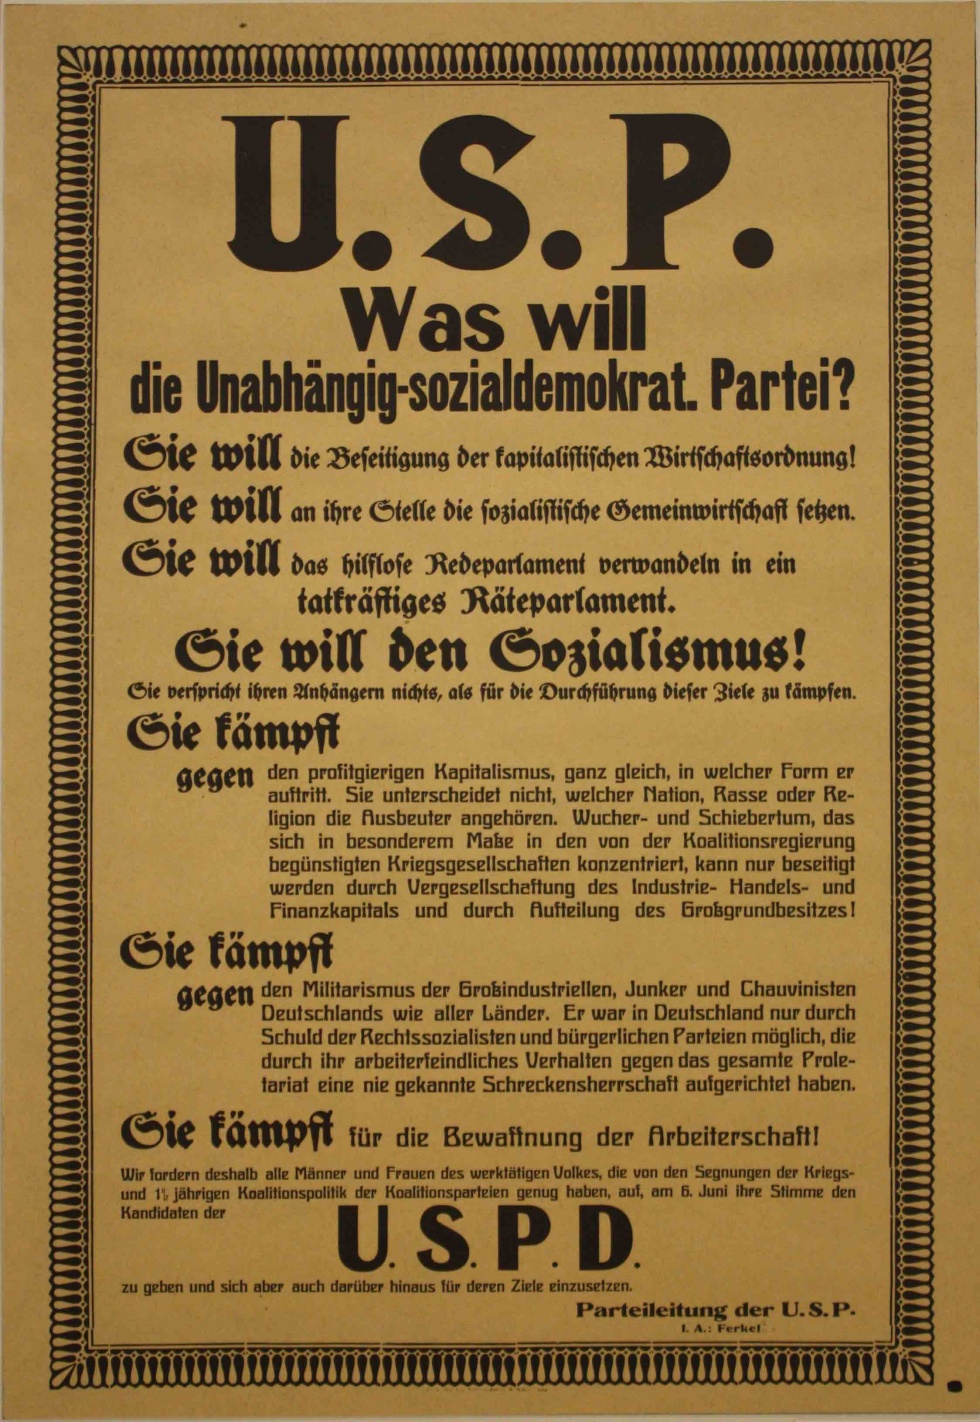 USPD-Plakat, 1920 (Kurt Tucholsky Literaturmuseum CC BY-NC-SA)